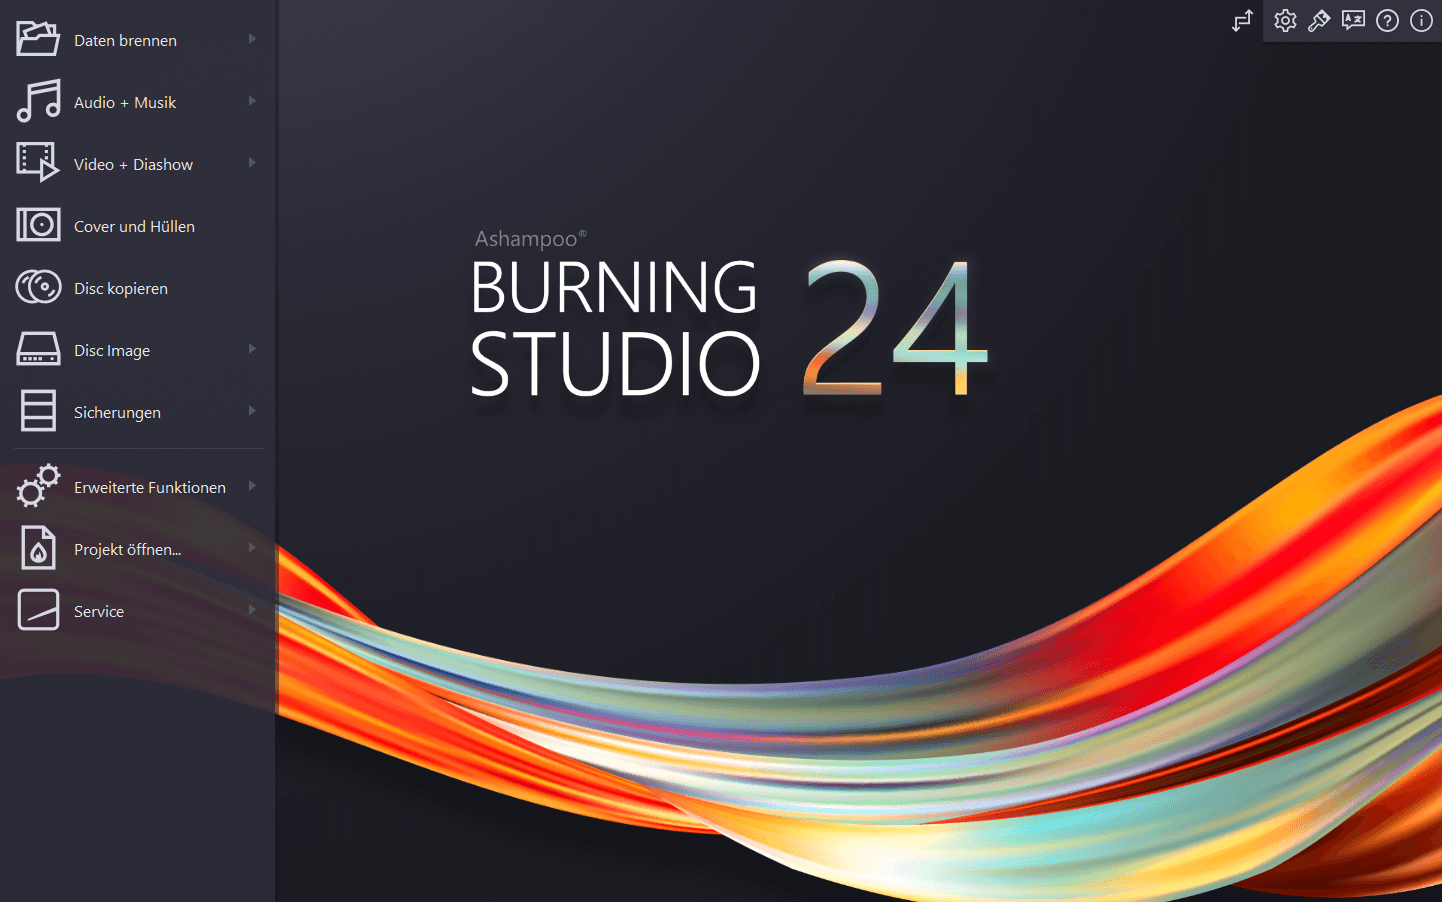 Ashampoo® Burning Studio 24 - Start dunkel